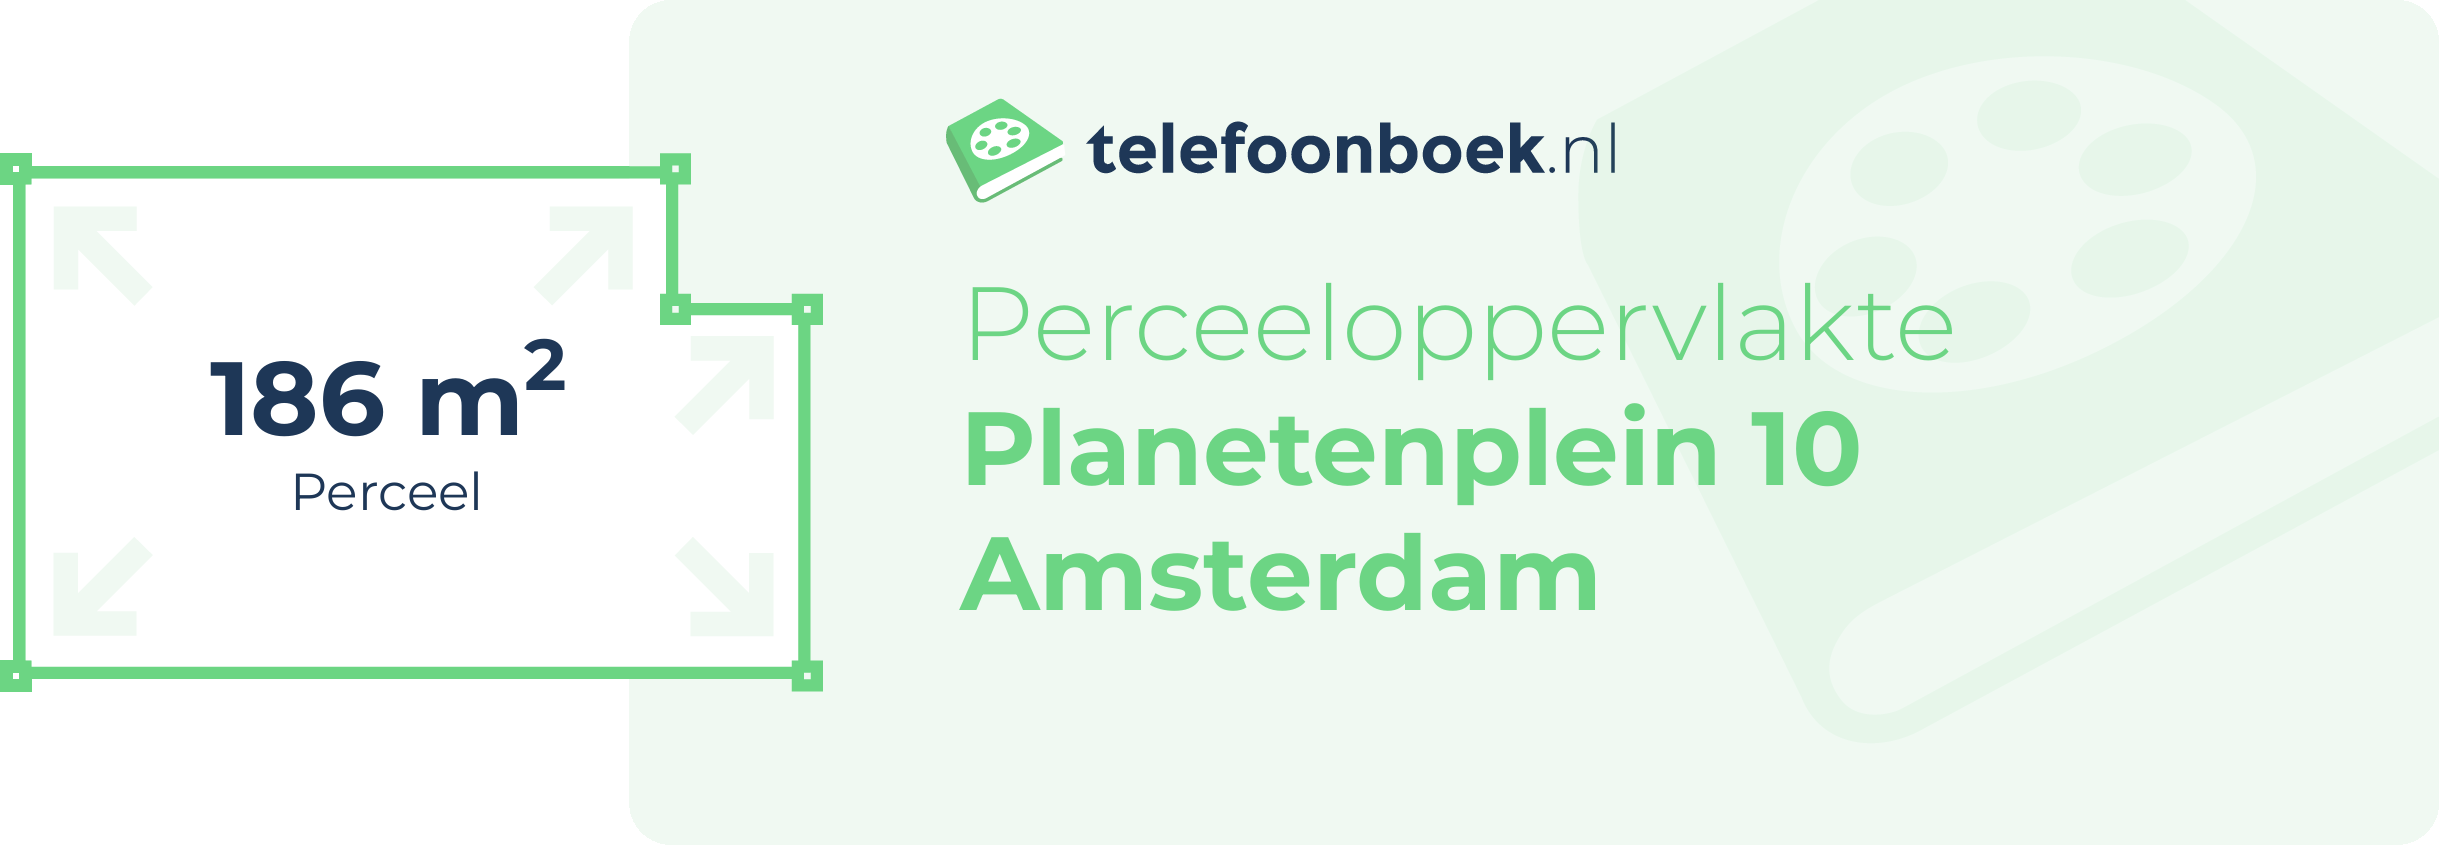 Perceeloppervlakte Planetenplein 10 Amsterdam